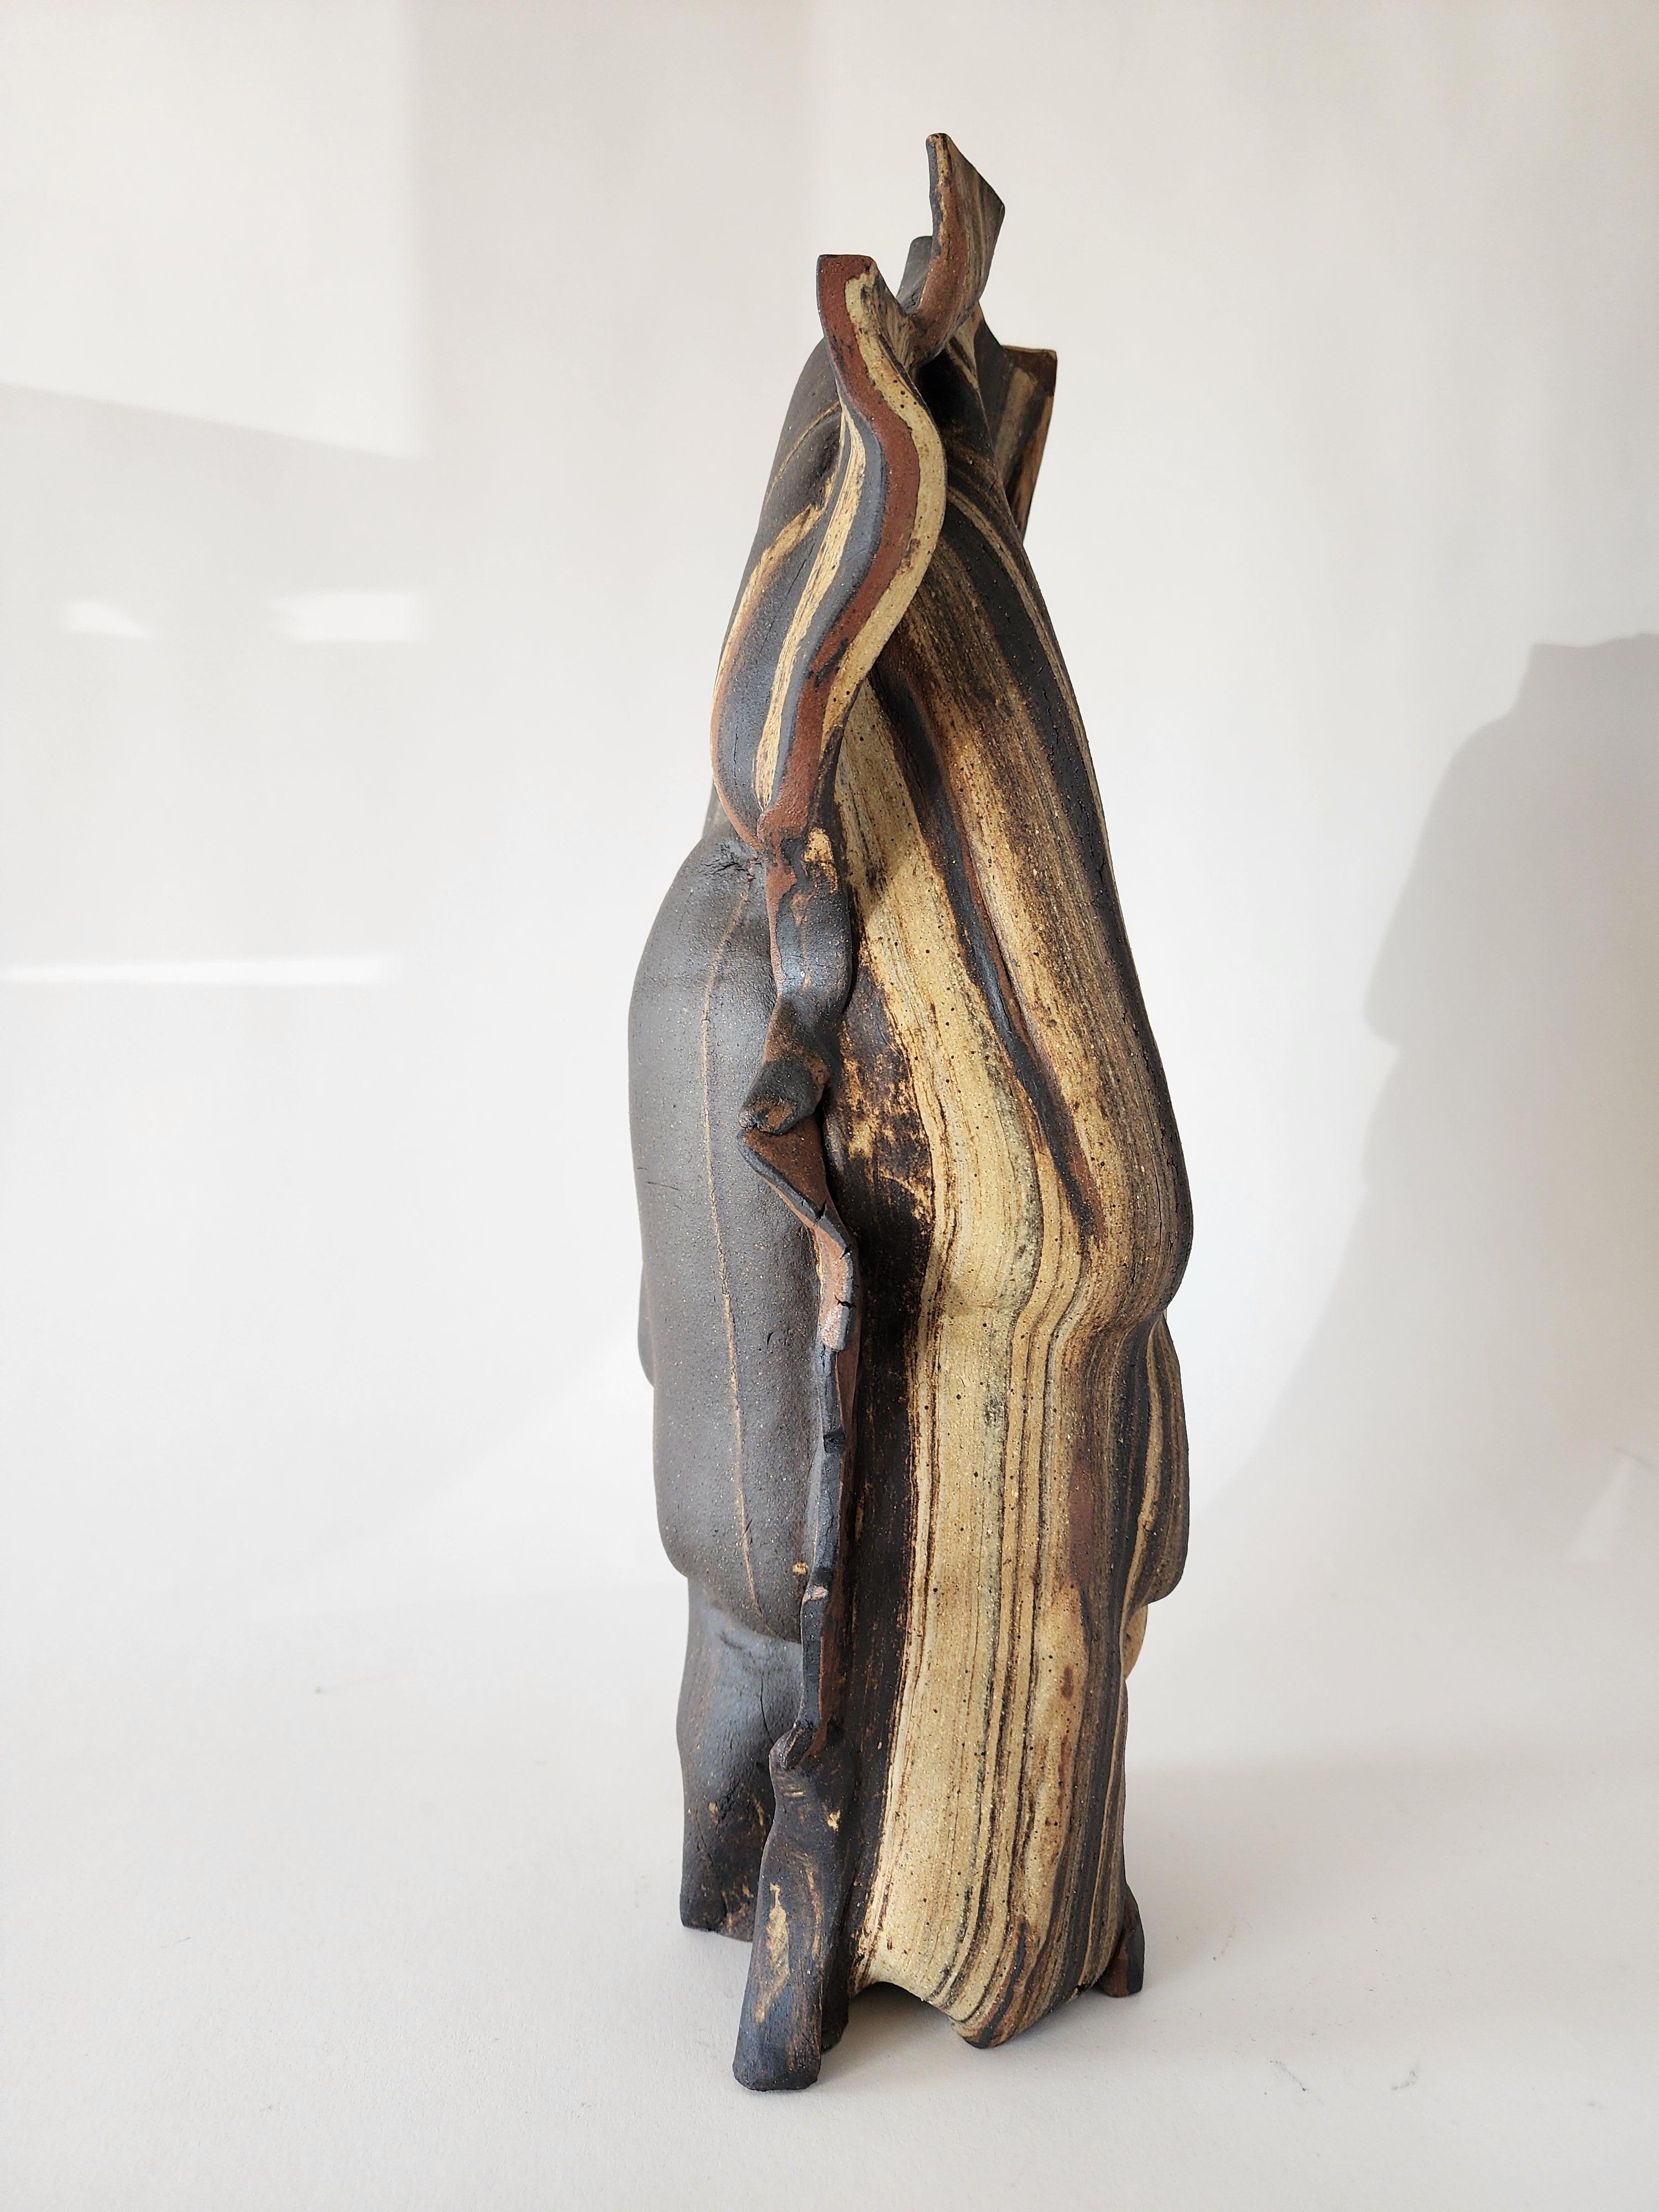 Abstract Sculpture Anna Bush Crews - Support NOR